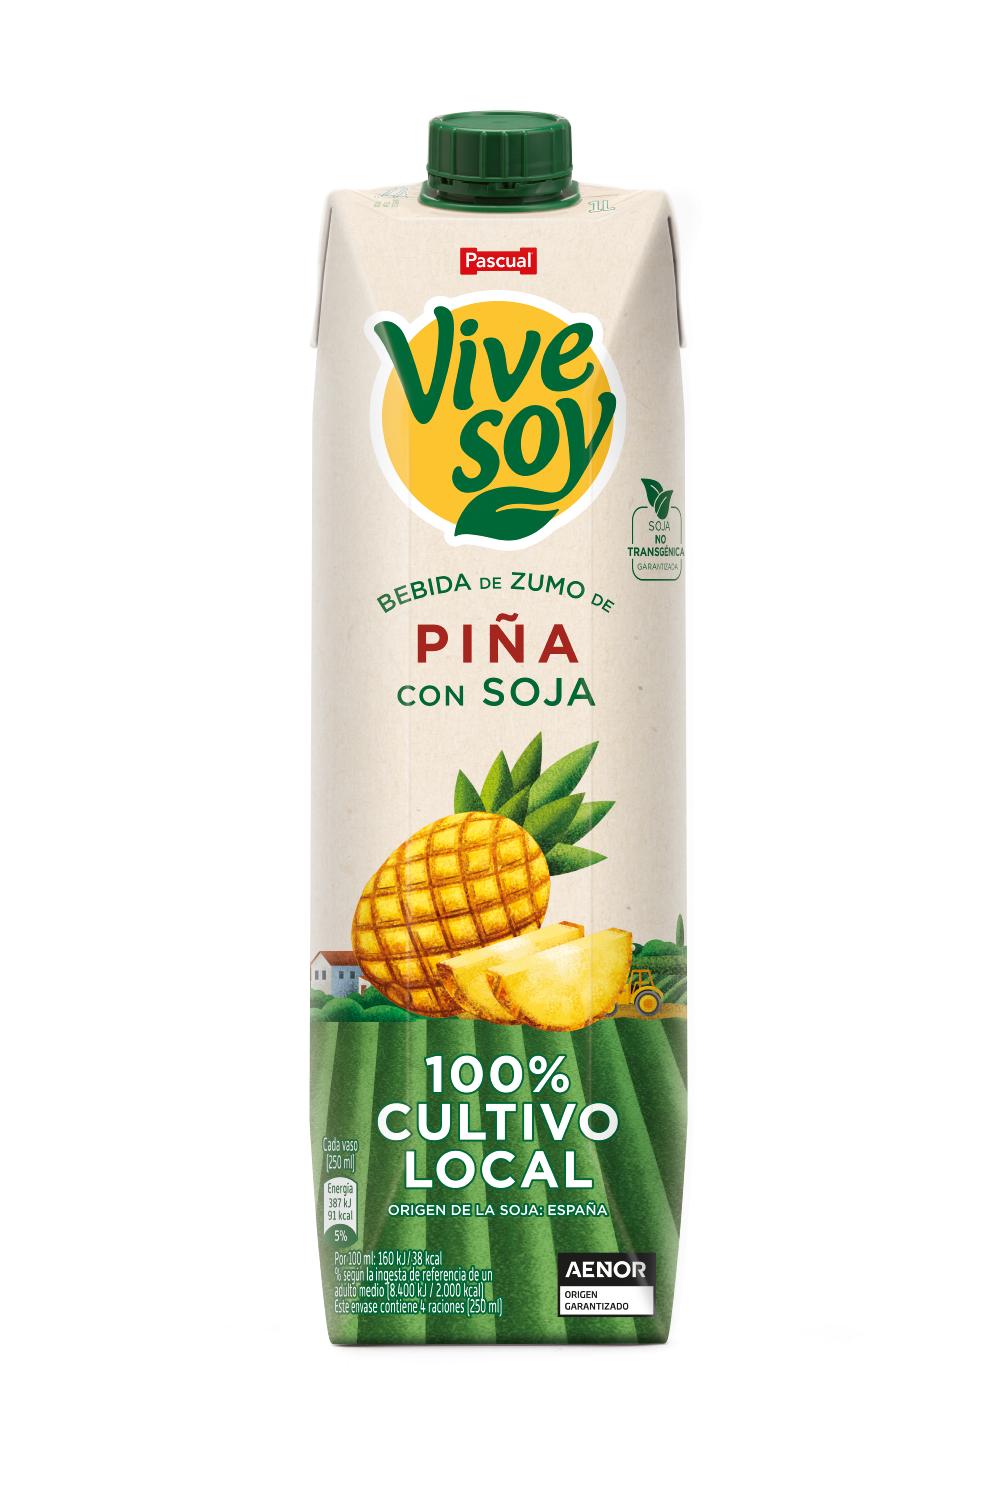 zumo piña & soja vivesoy brik 1 l